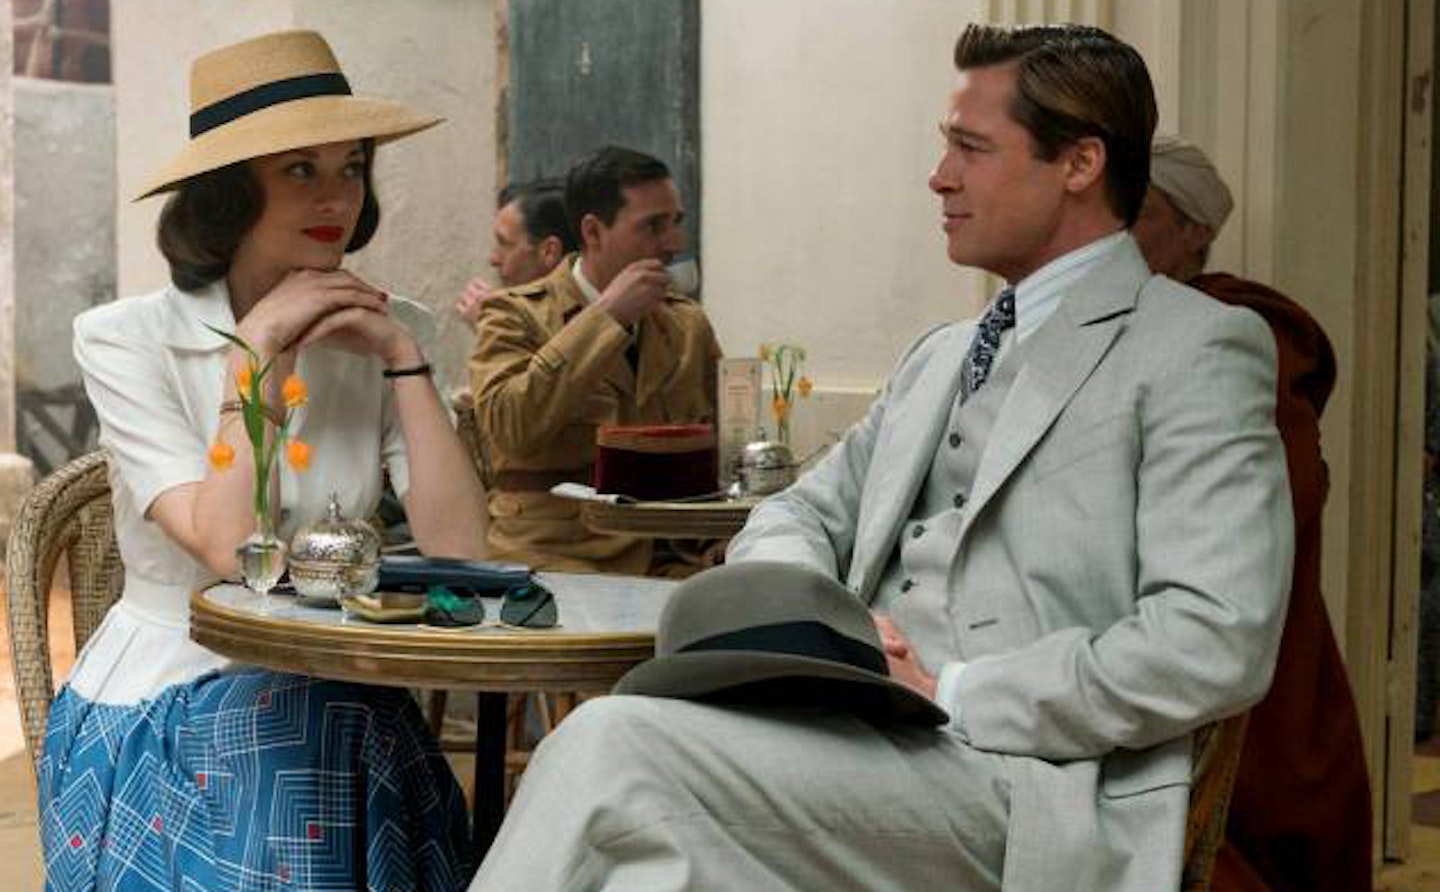 Brad Pitt and Marion Cotillard in Allied